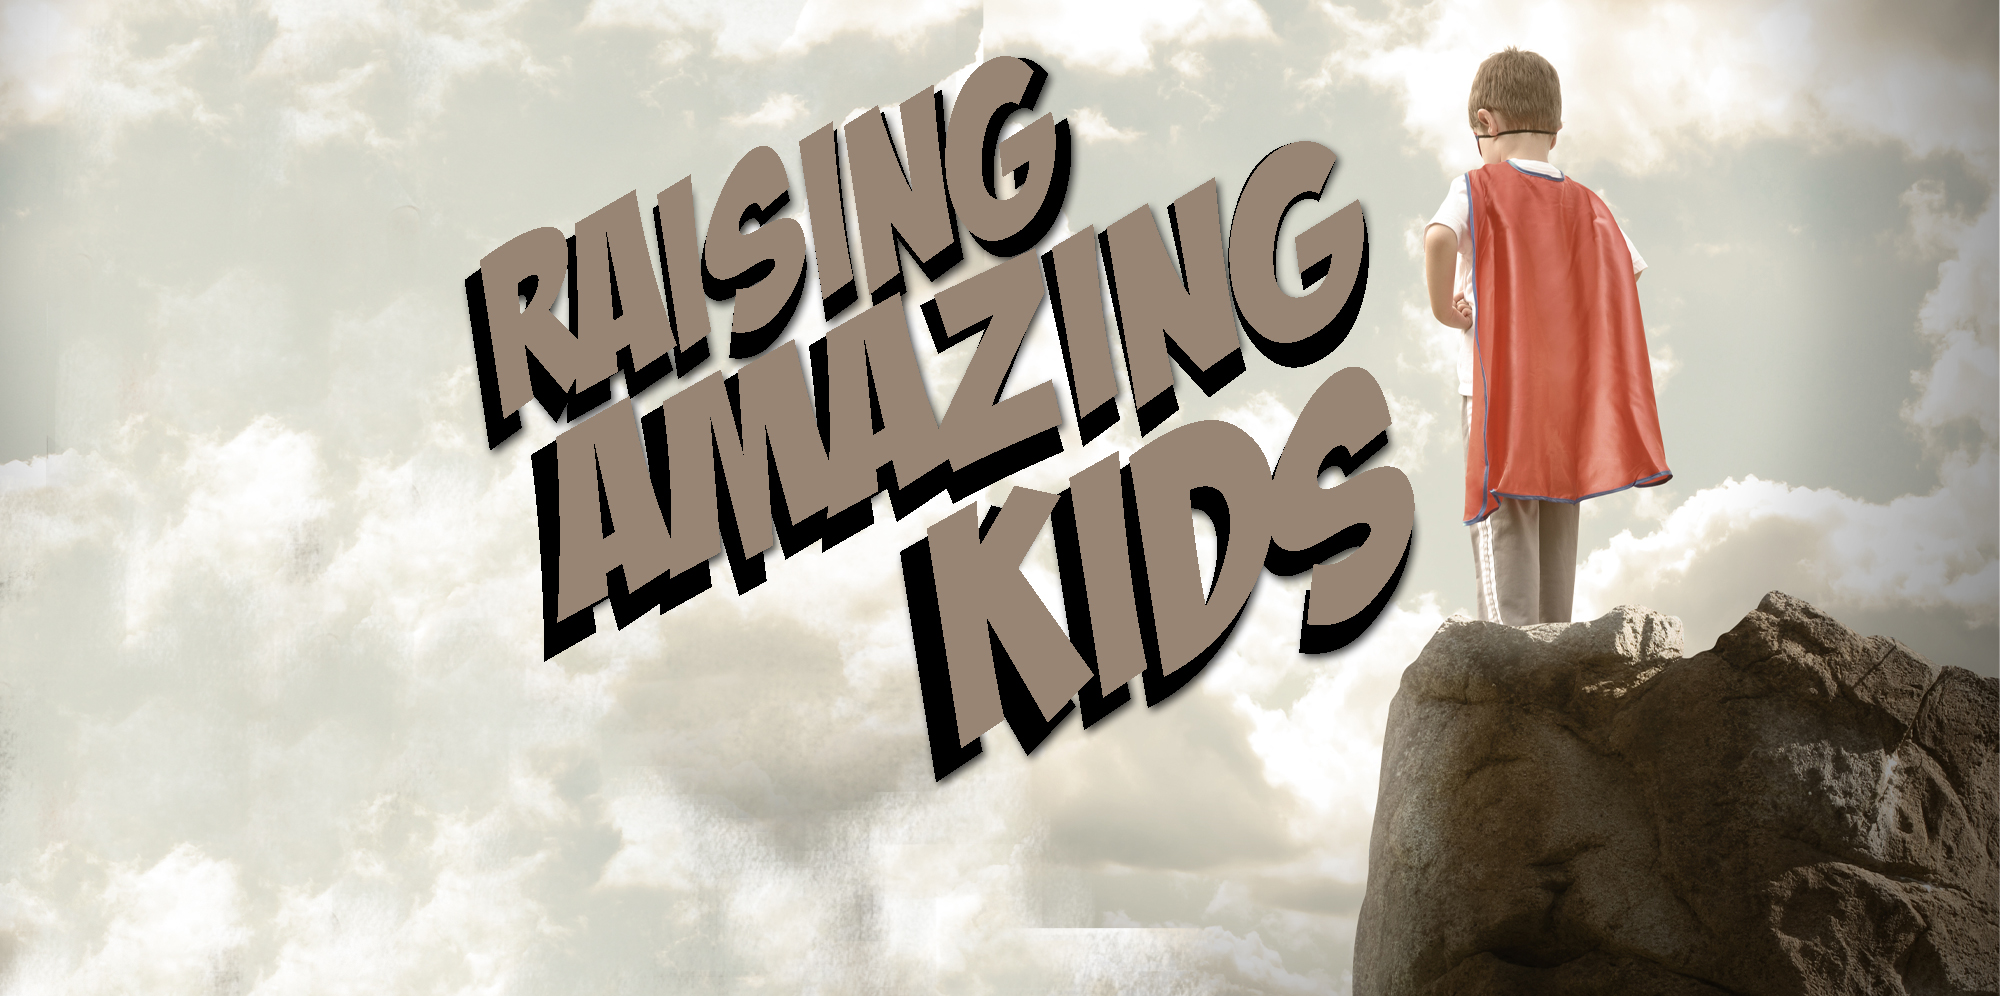 10-20-13 Raising Amazing Kids - Part 3 Continued - Purpose Driven Kids